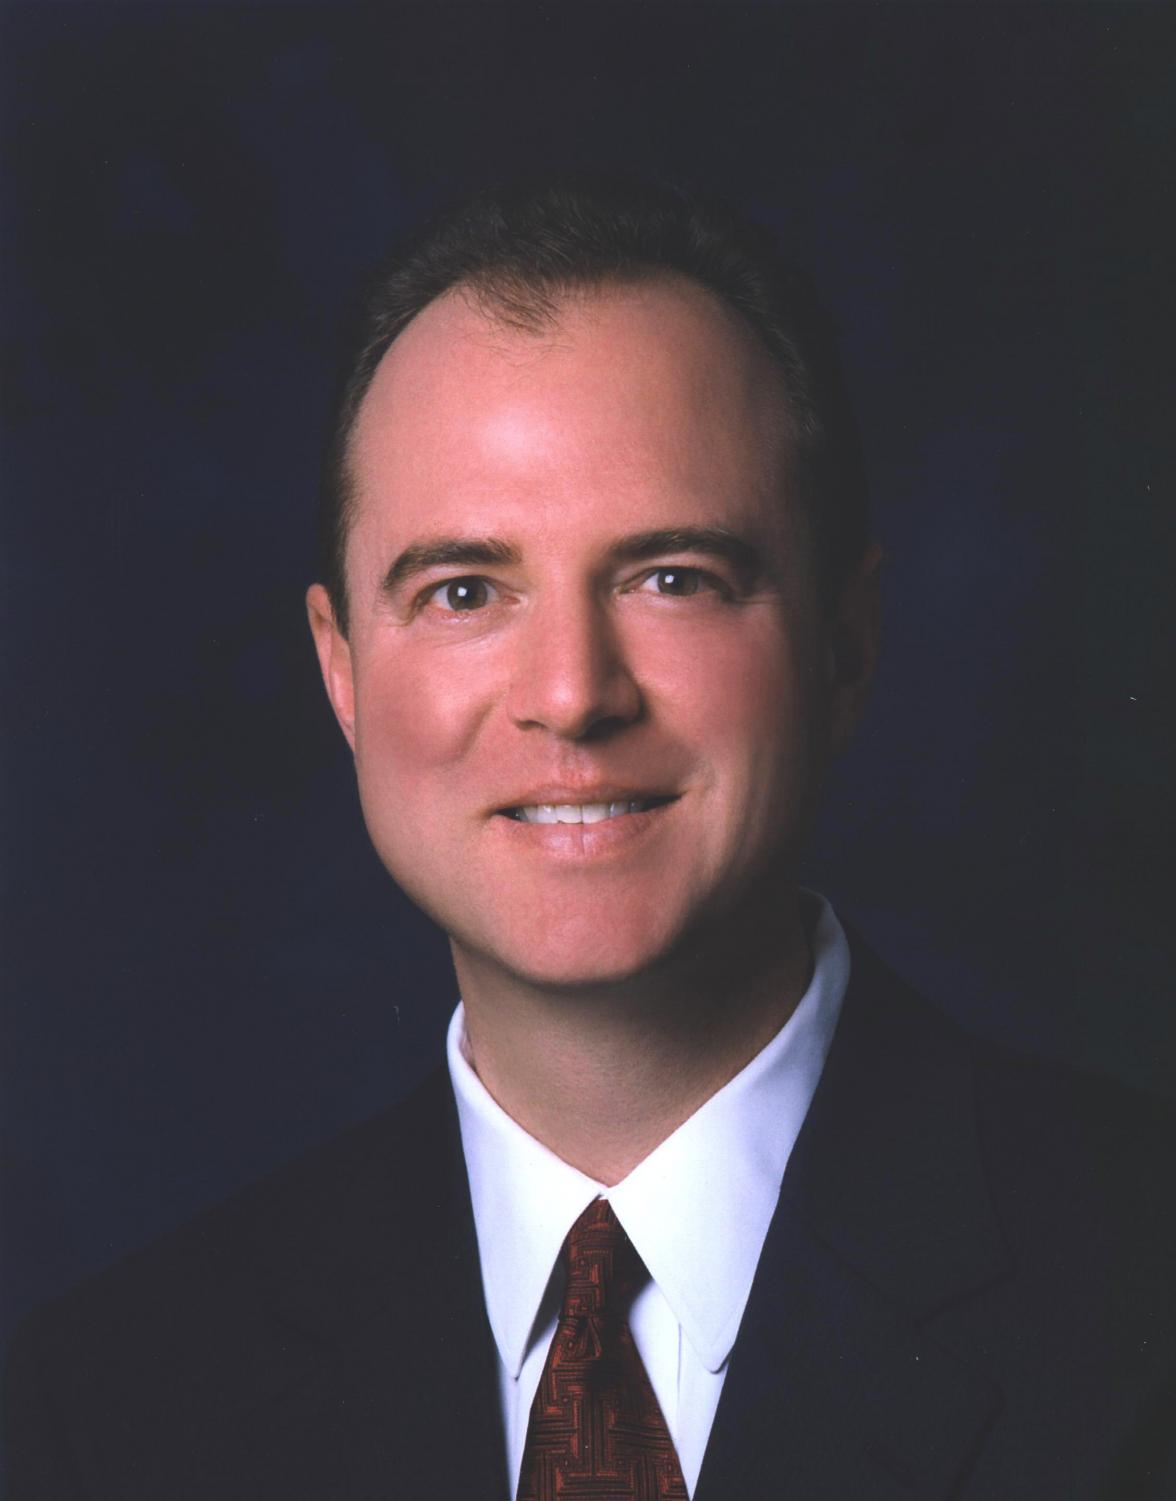 Representative Adam Schiff, the author of the Democratic Intelligence Memo. 